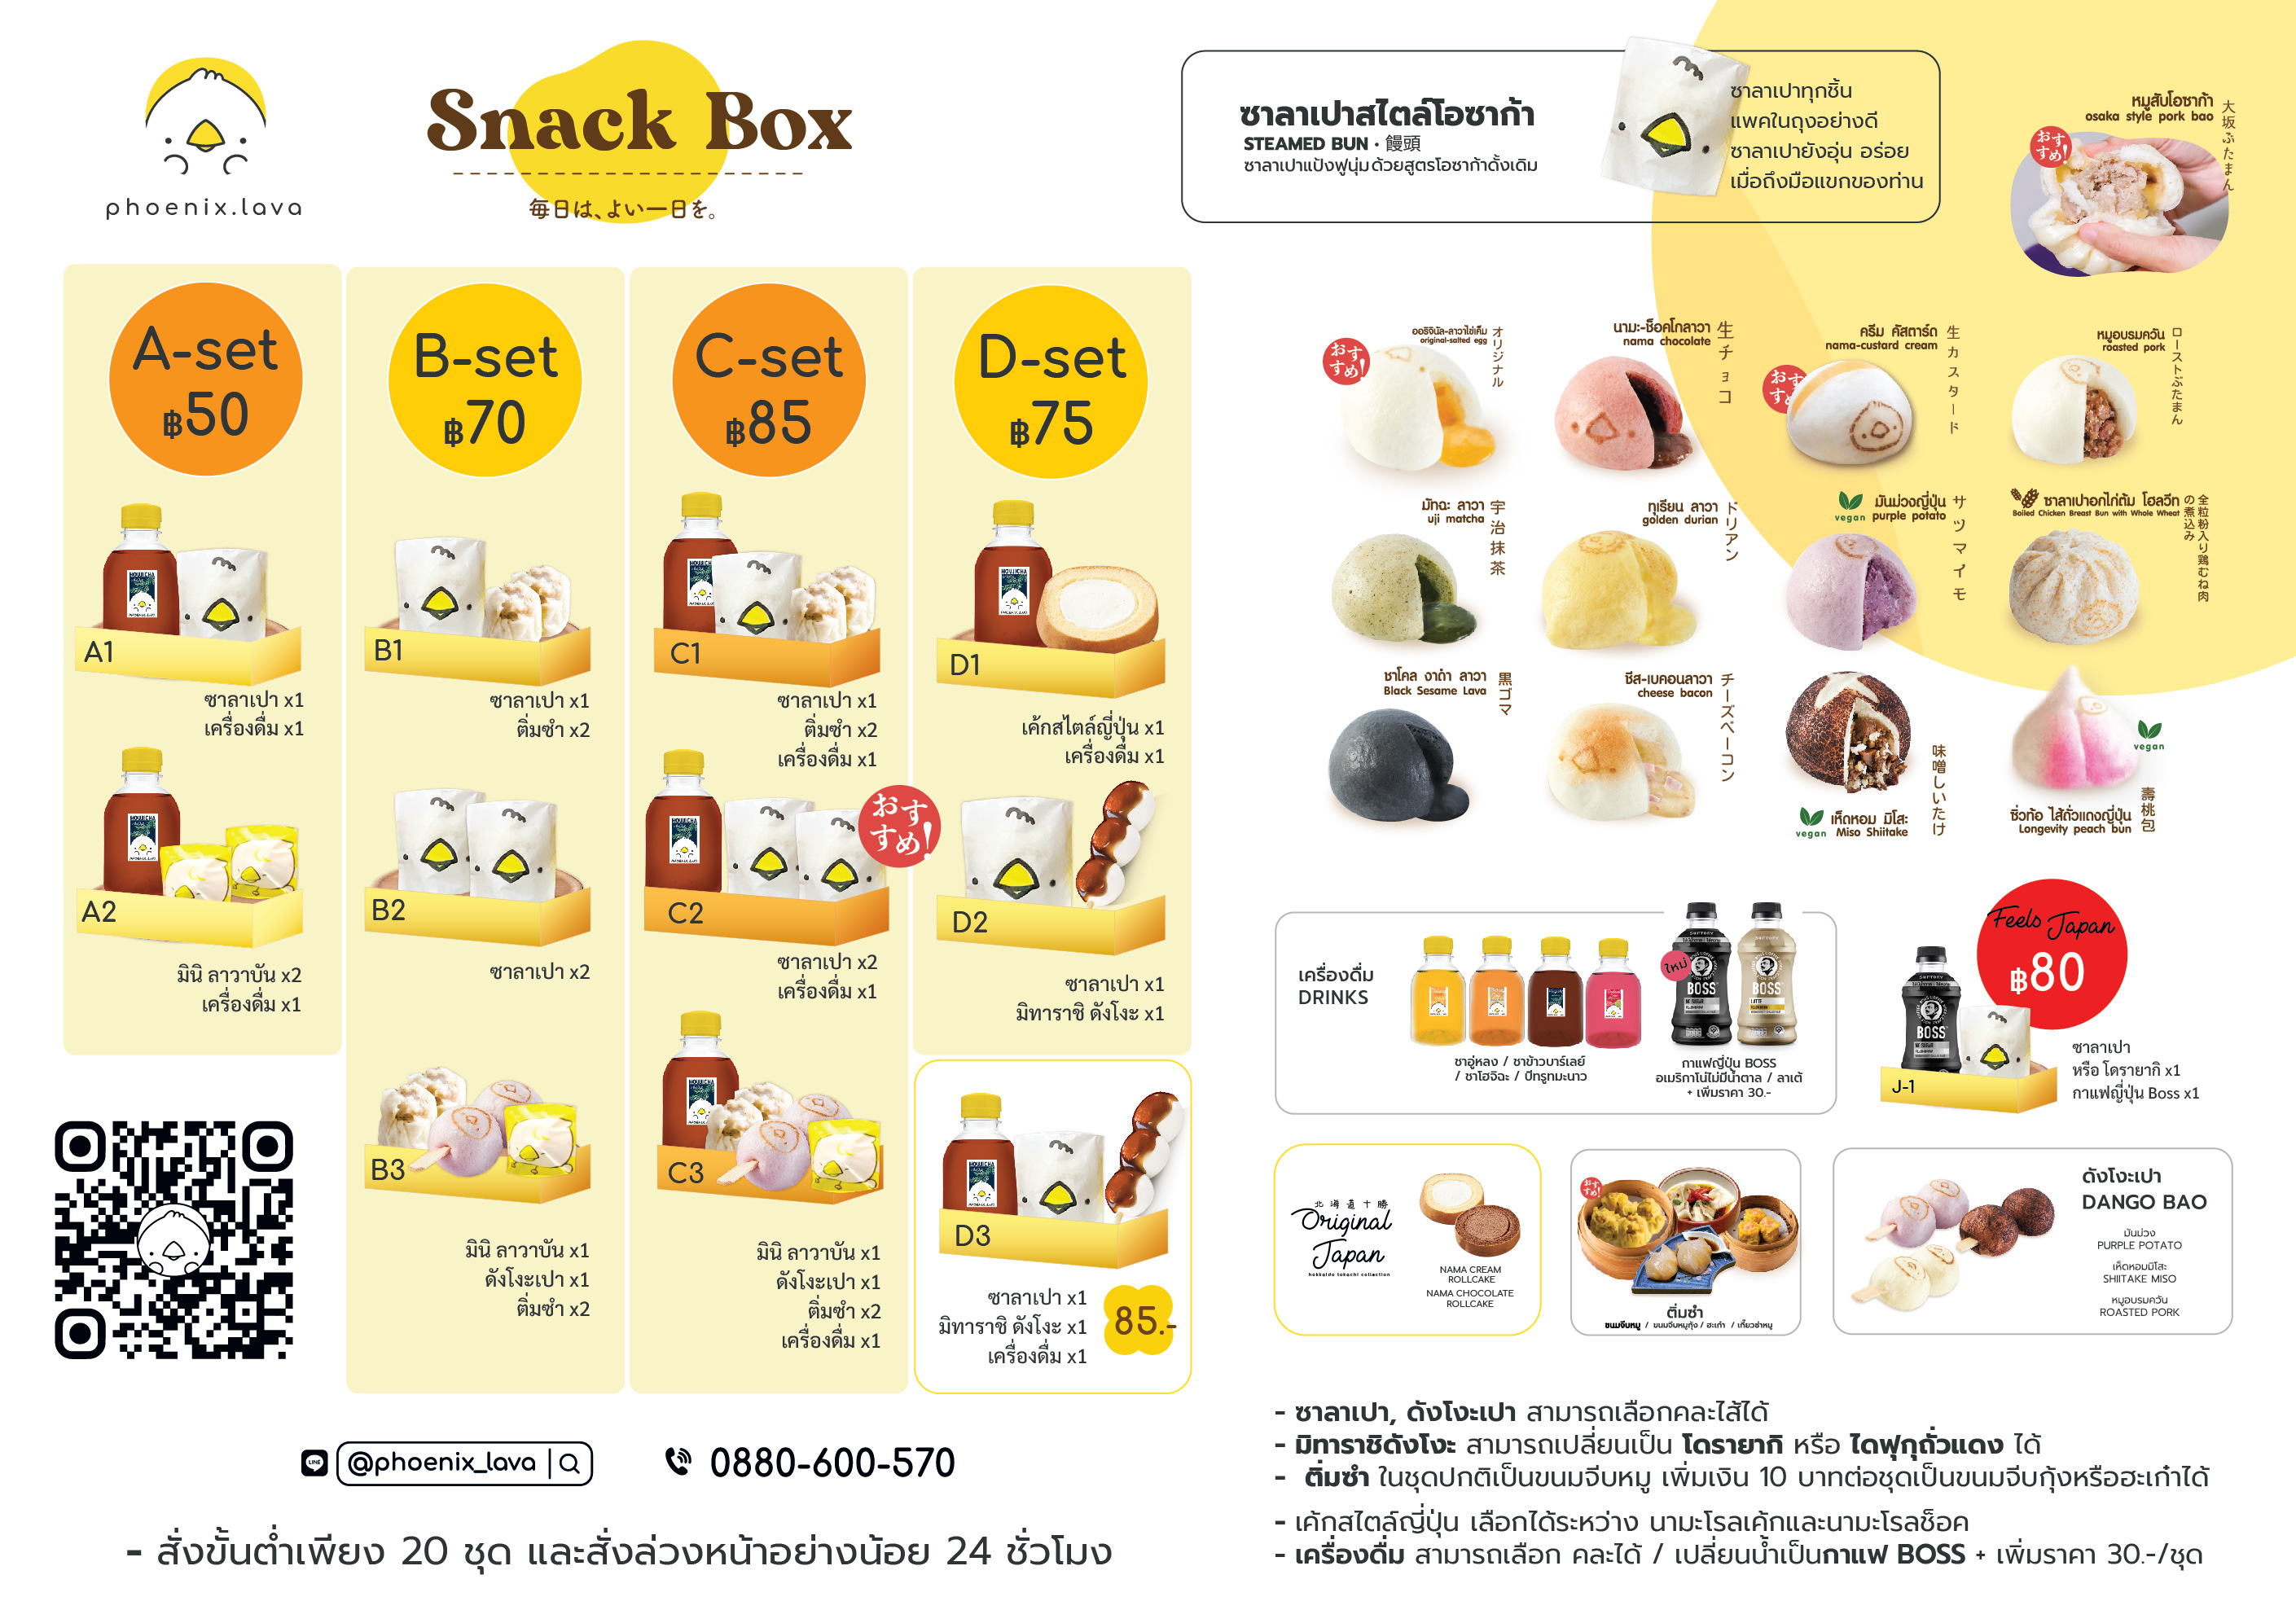 snack box, ขนมเบรค, รับจัดขนมเบรค, snackbox